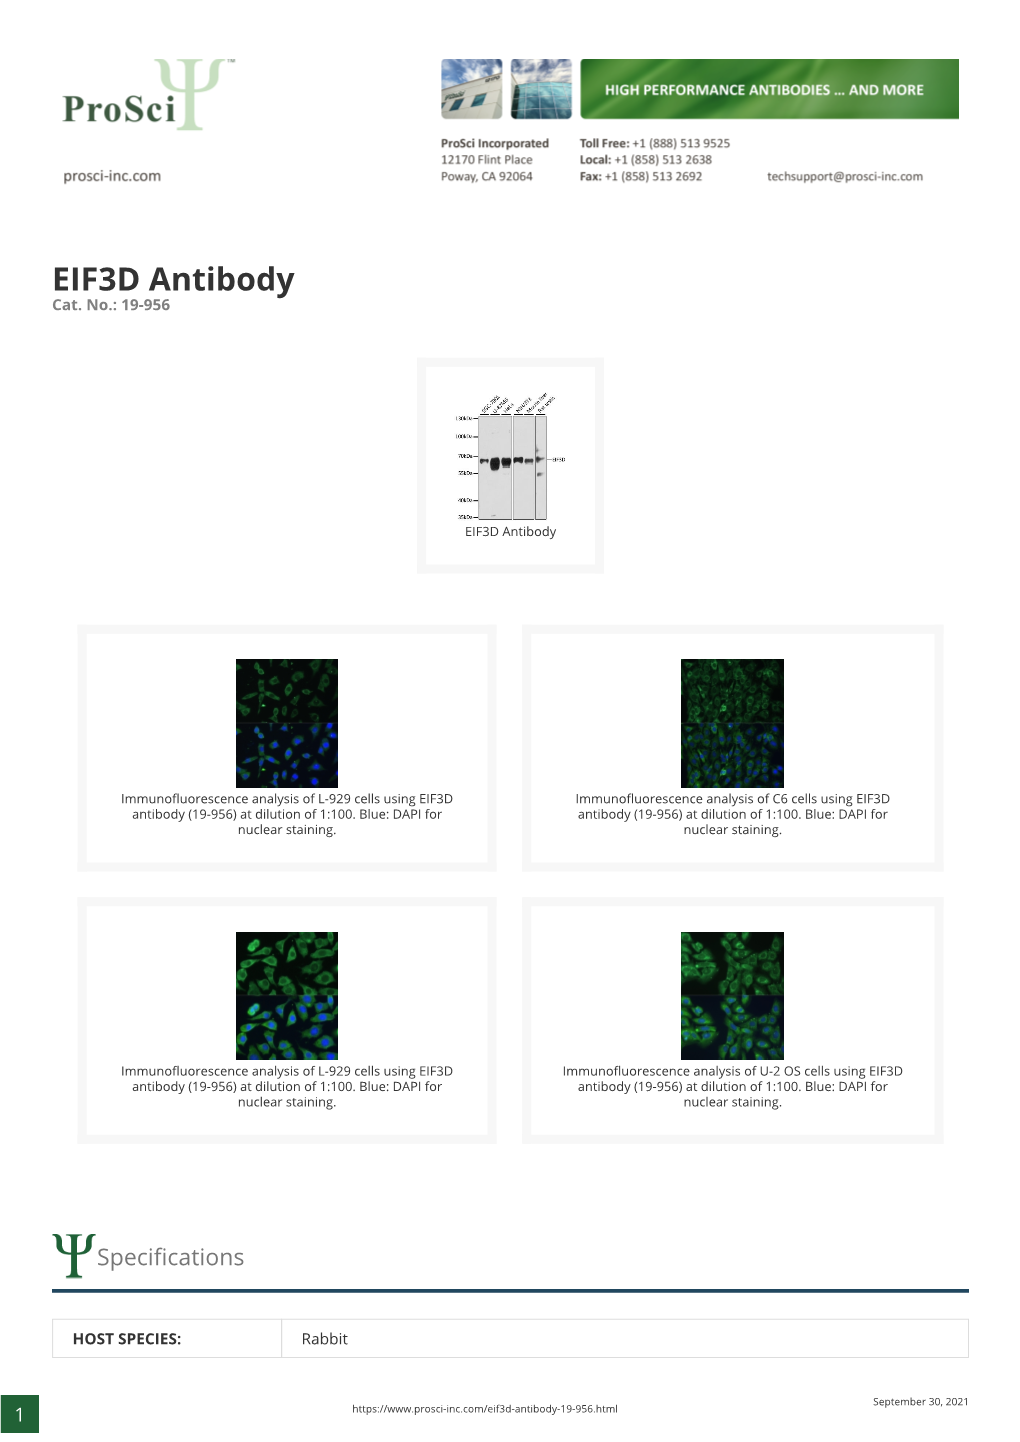 EIF3D Antibody Cat